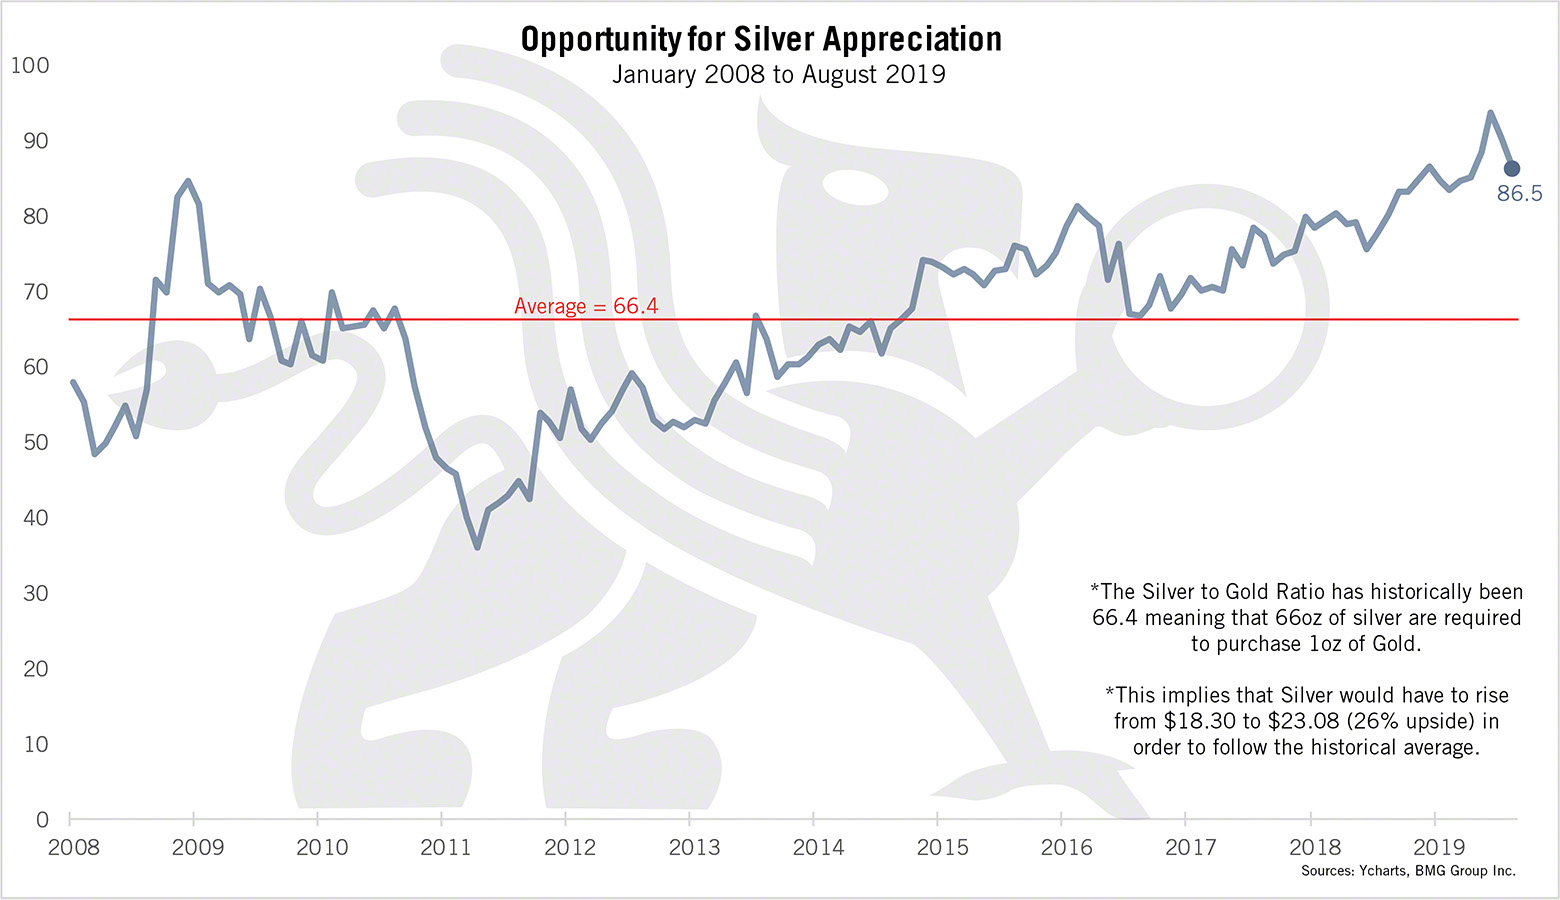 2008 Silver Chart